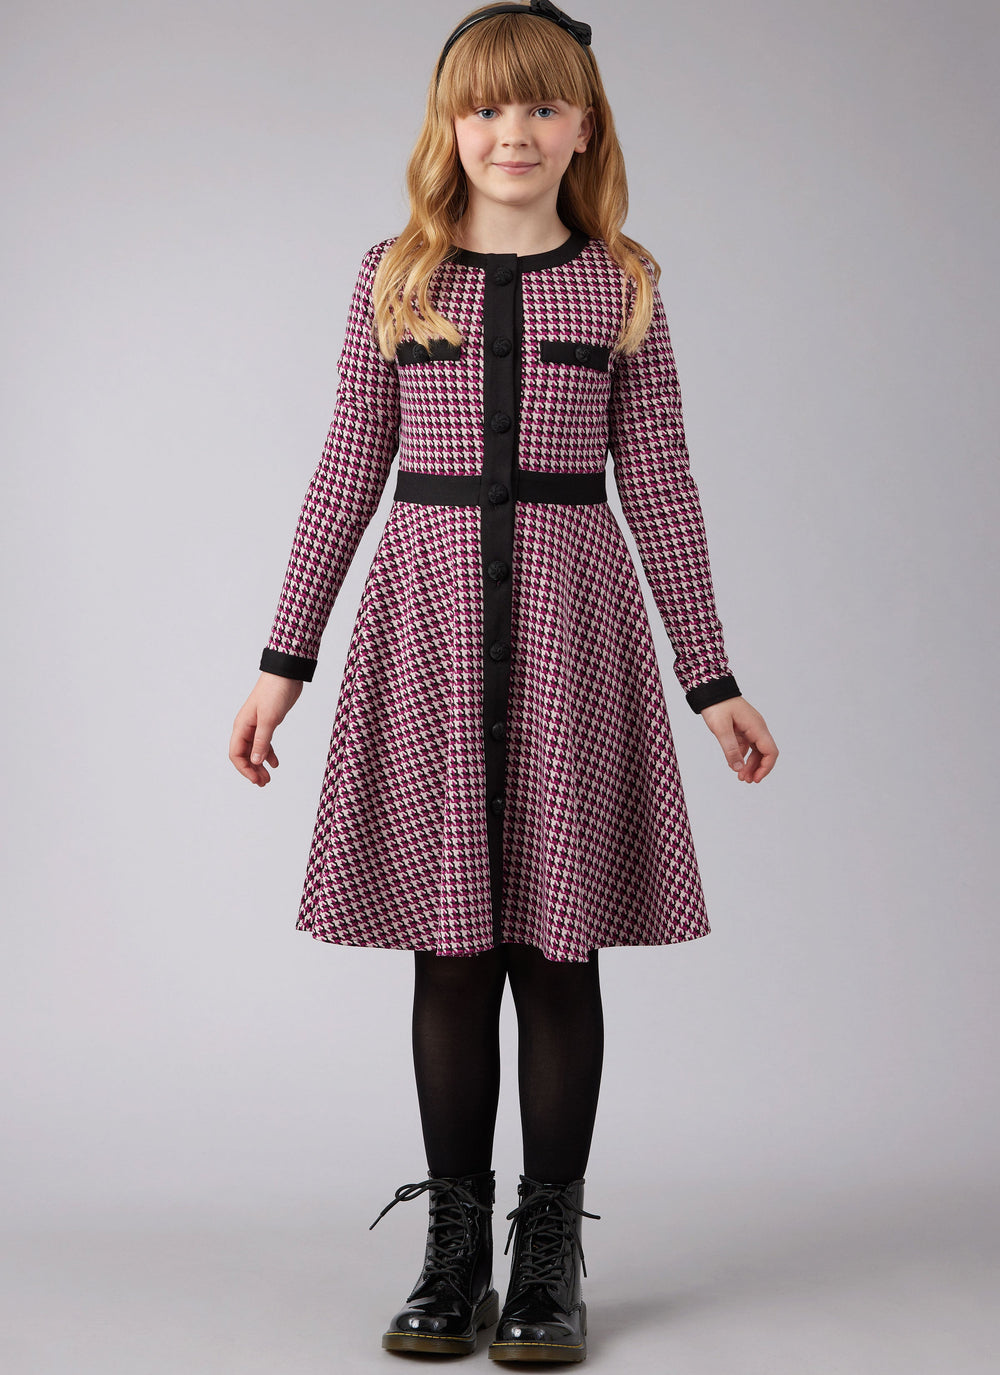 McCall's Sewing Patterns Childrens Girls Dresses Sash Size CL 6 7 8 M6018  Shrug | eBay